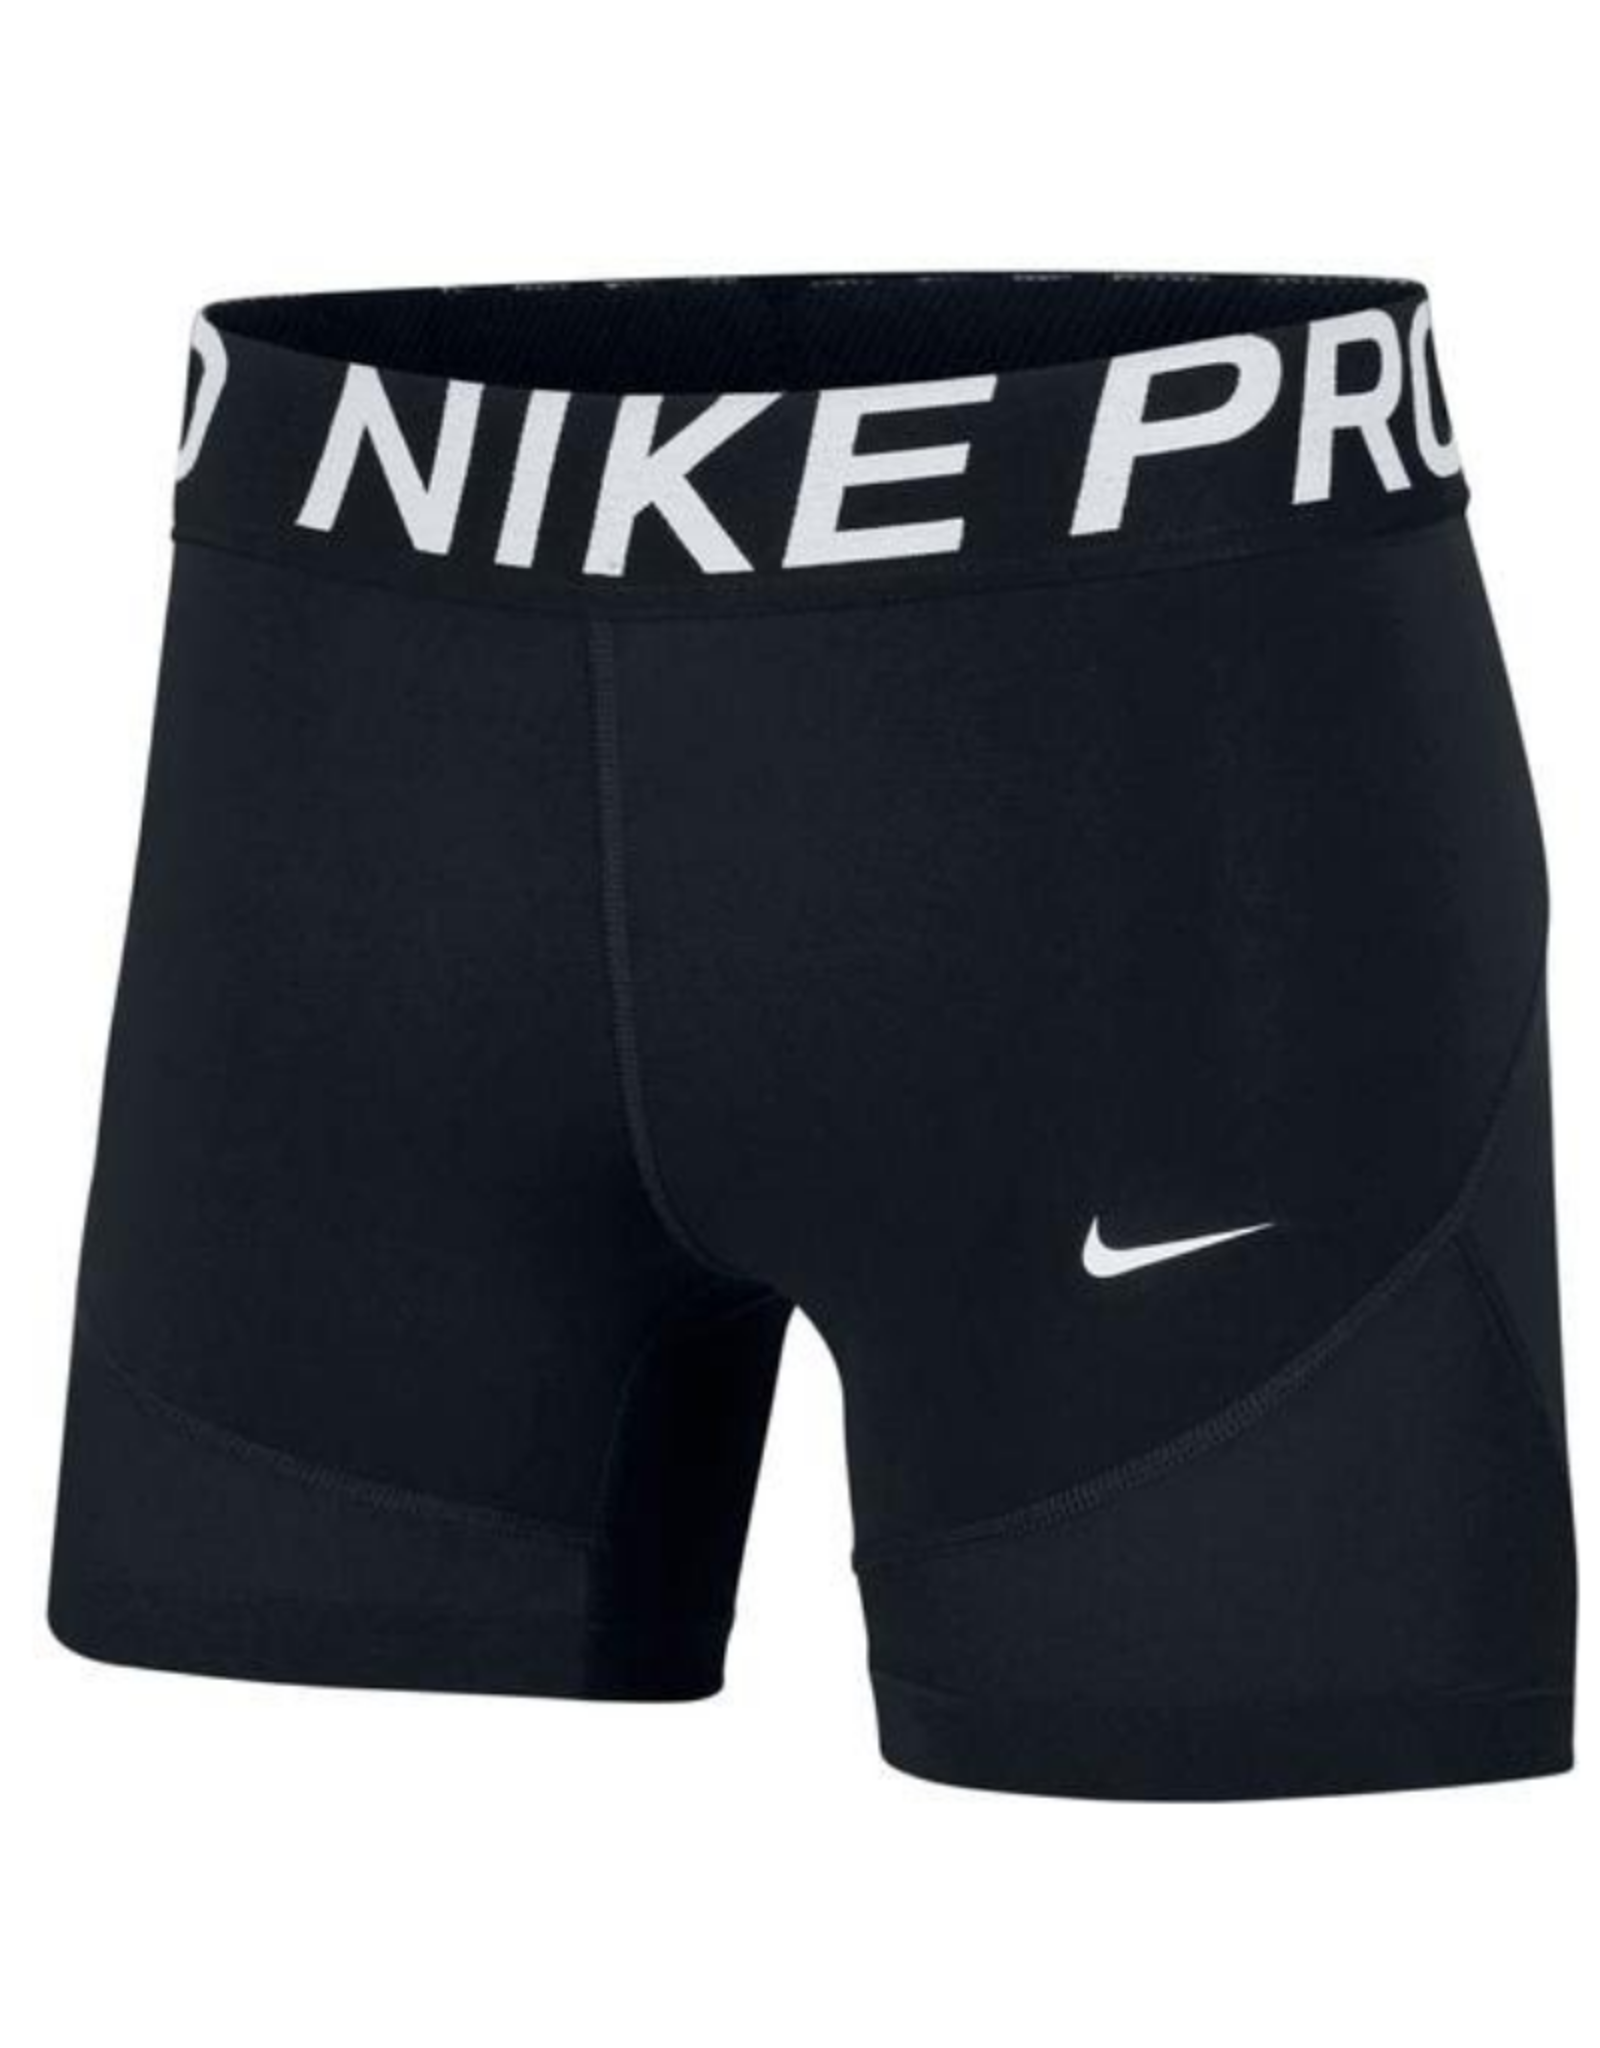 black nike volleyball shorts